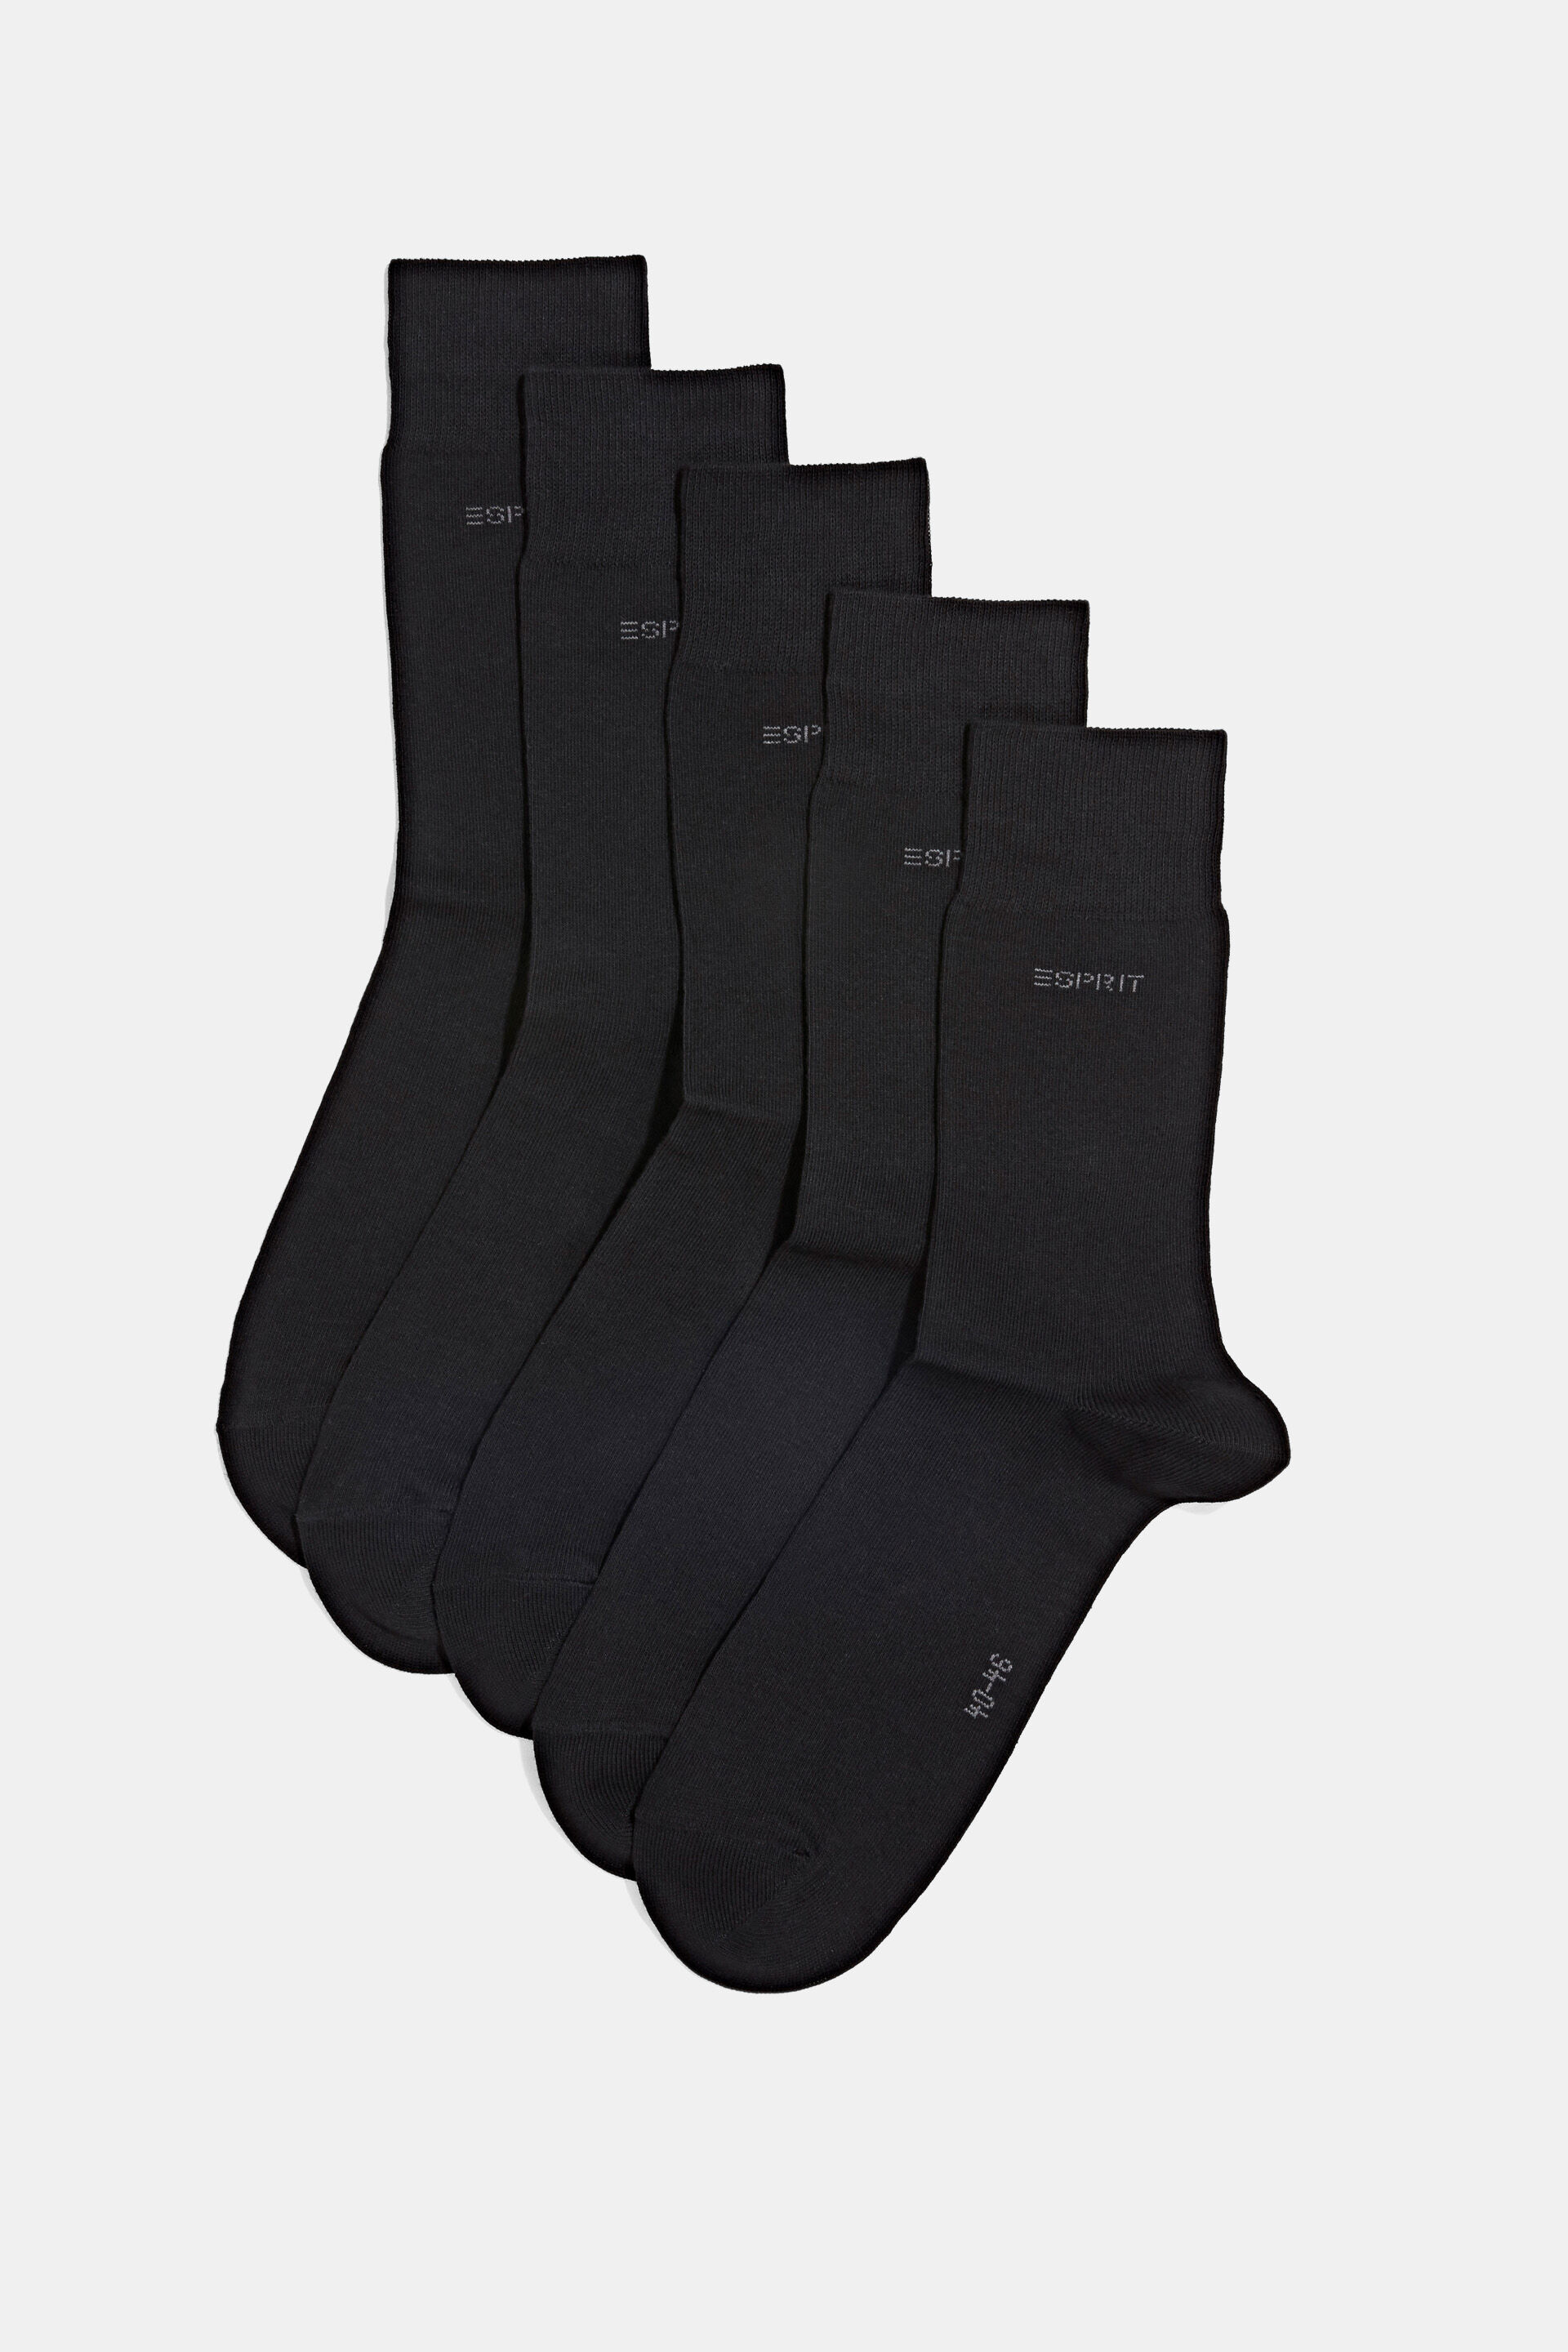 Esprit Pack socks, blended cotton organic 5 of